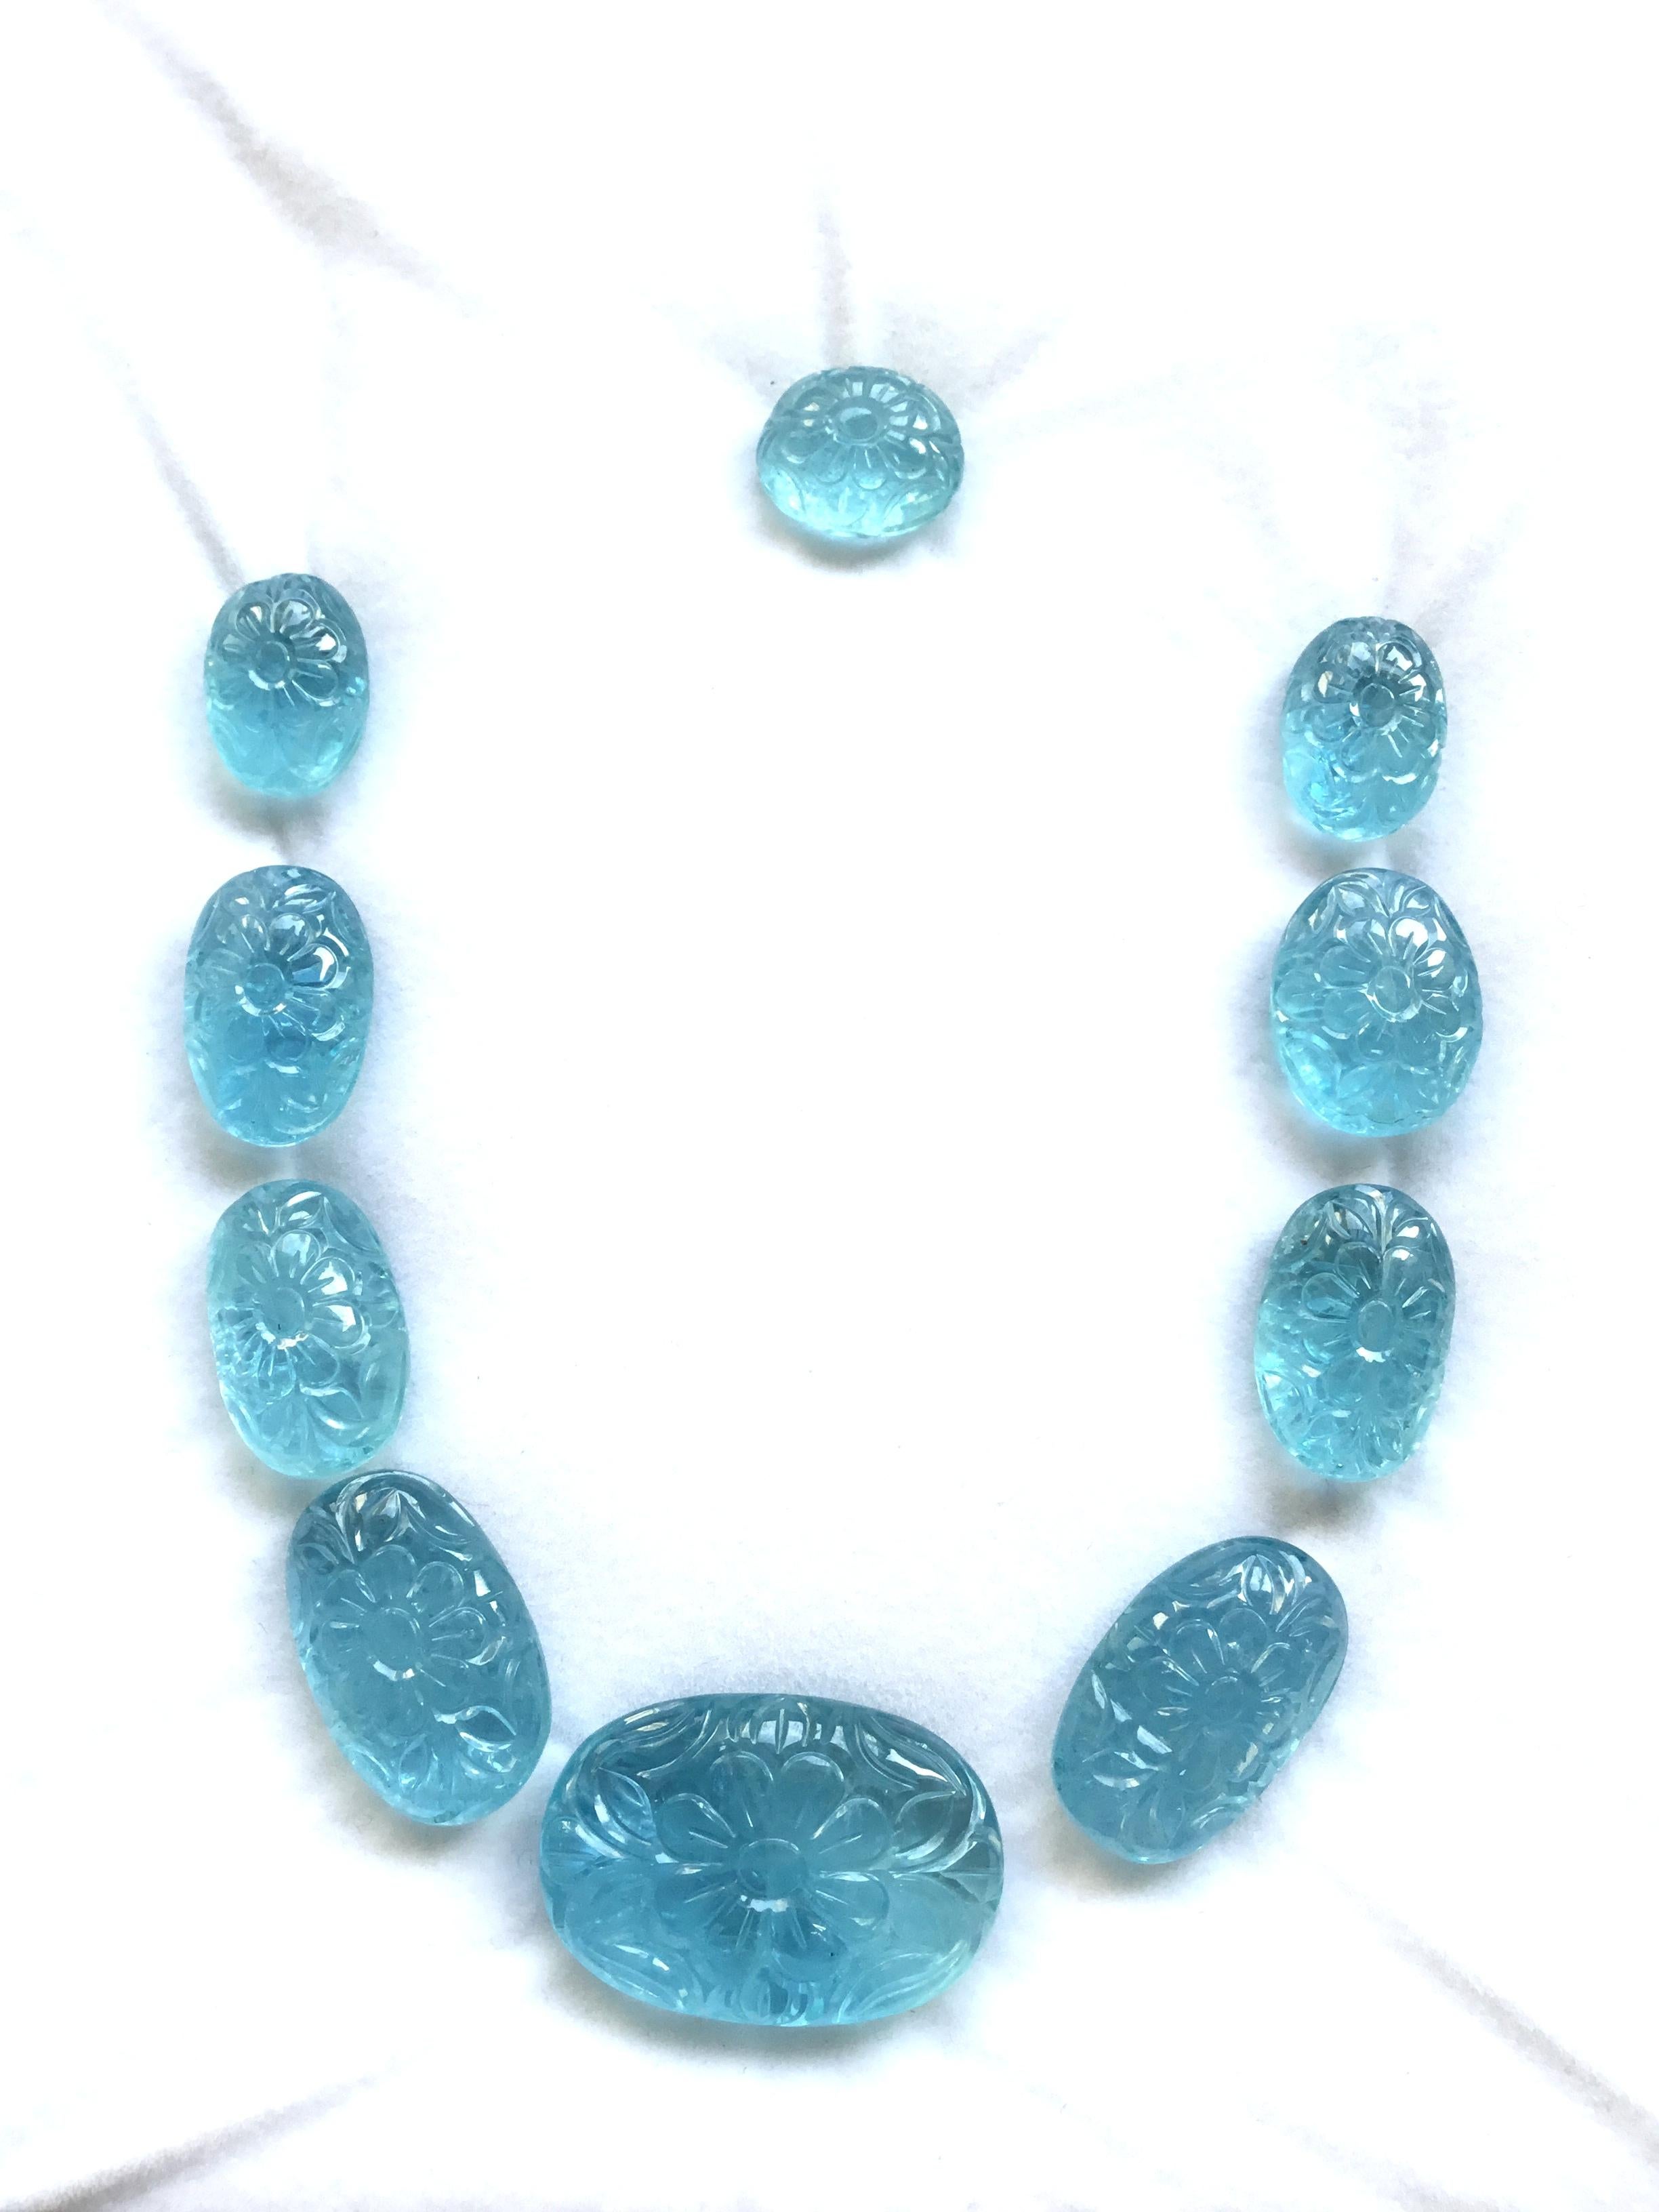 aquamarine stones for jewelry making